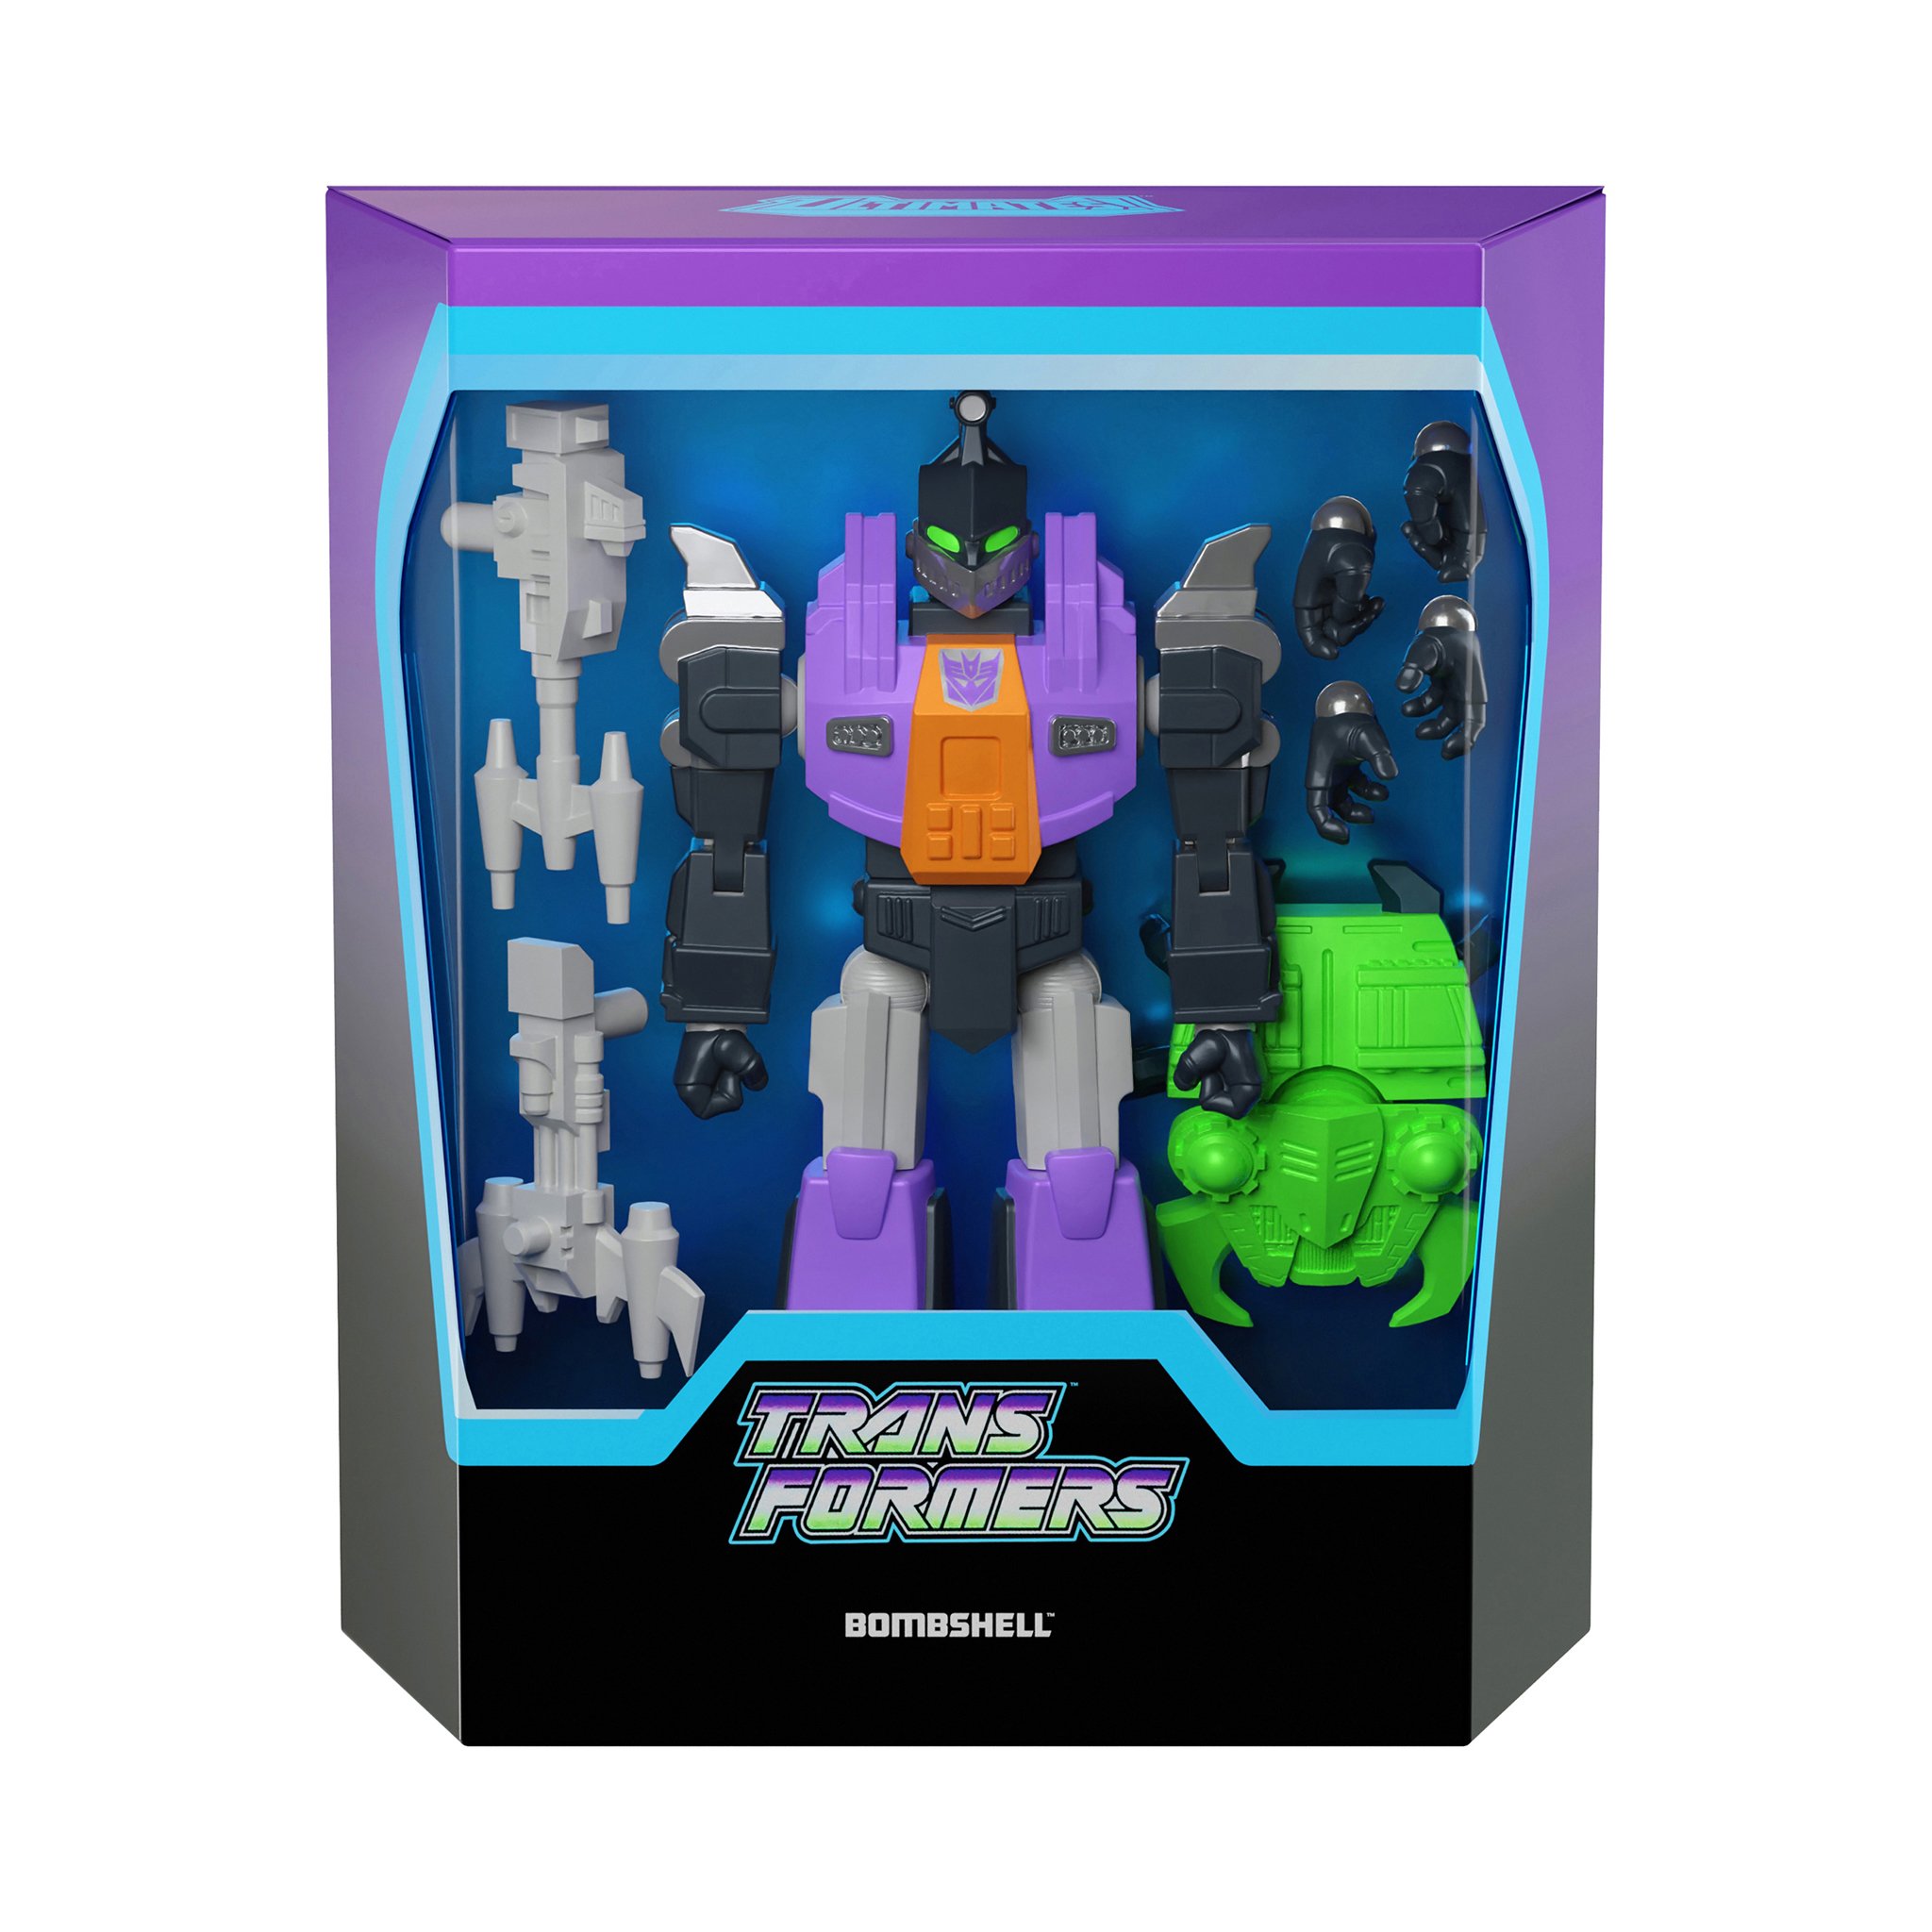 Transformers Bombshell box